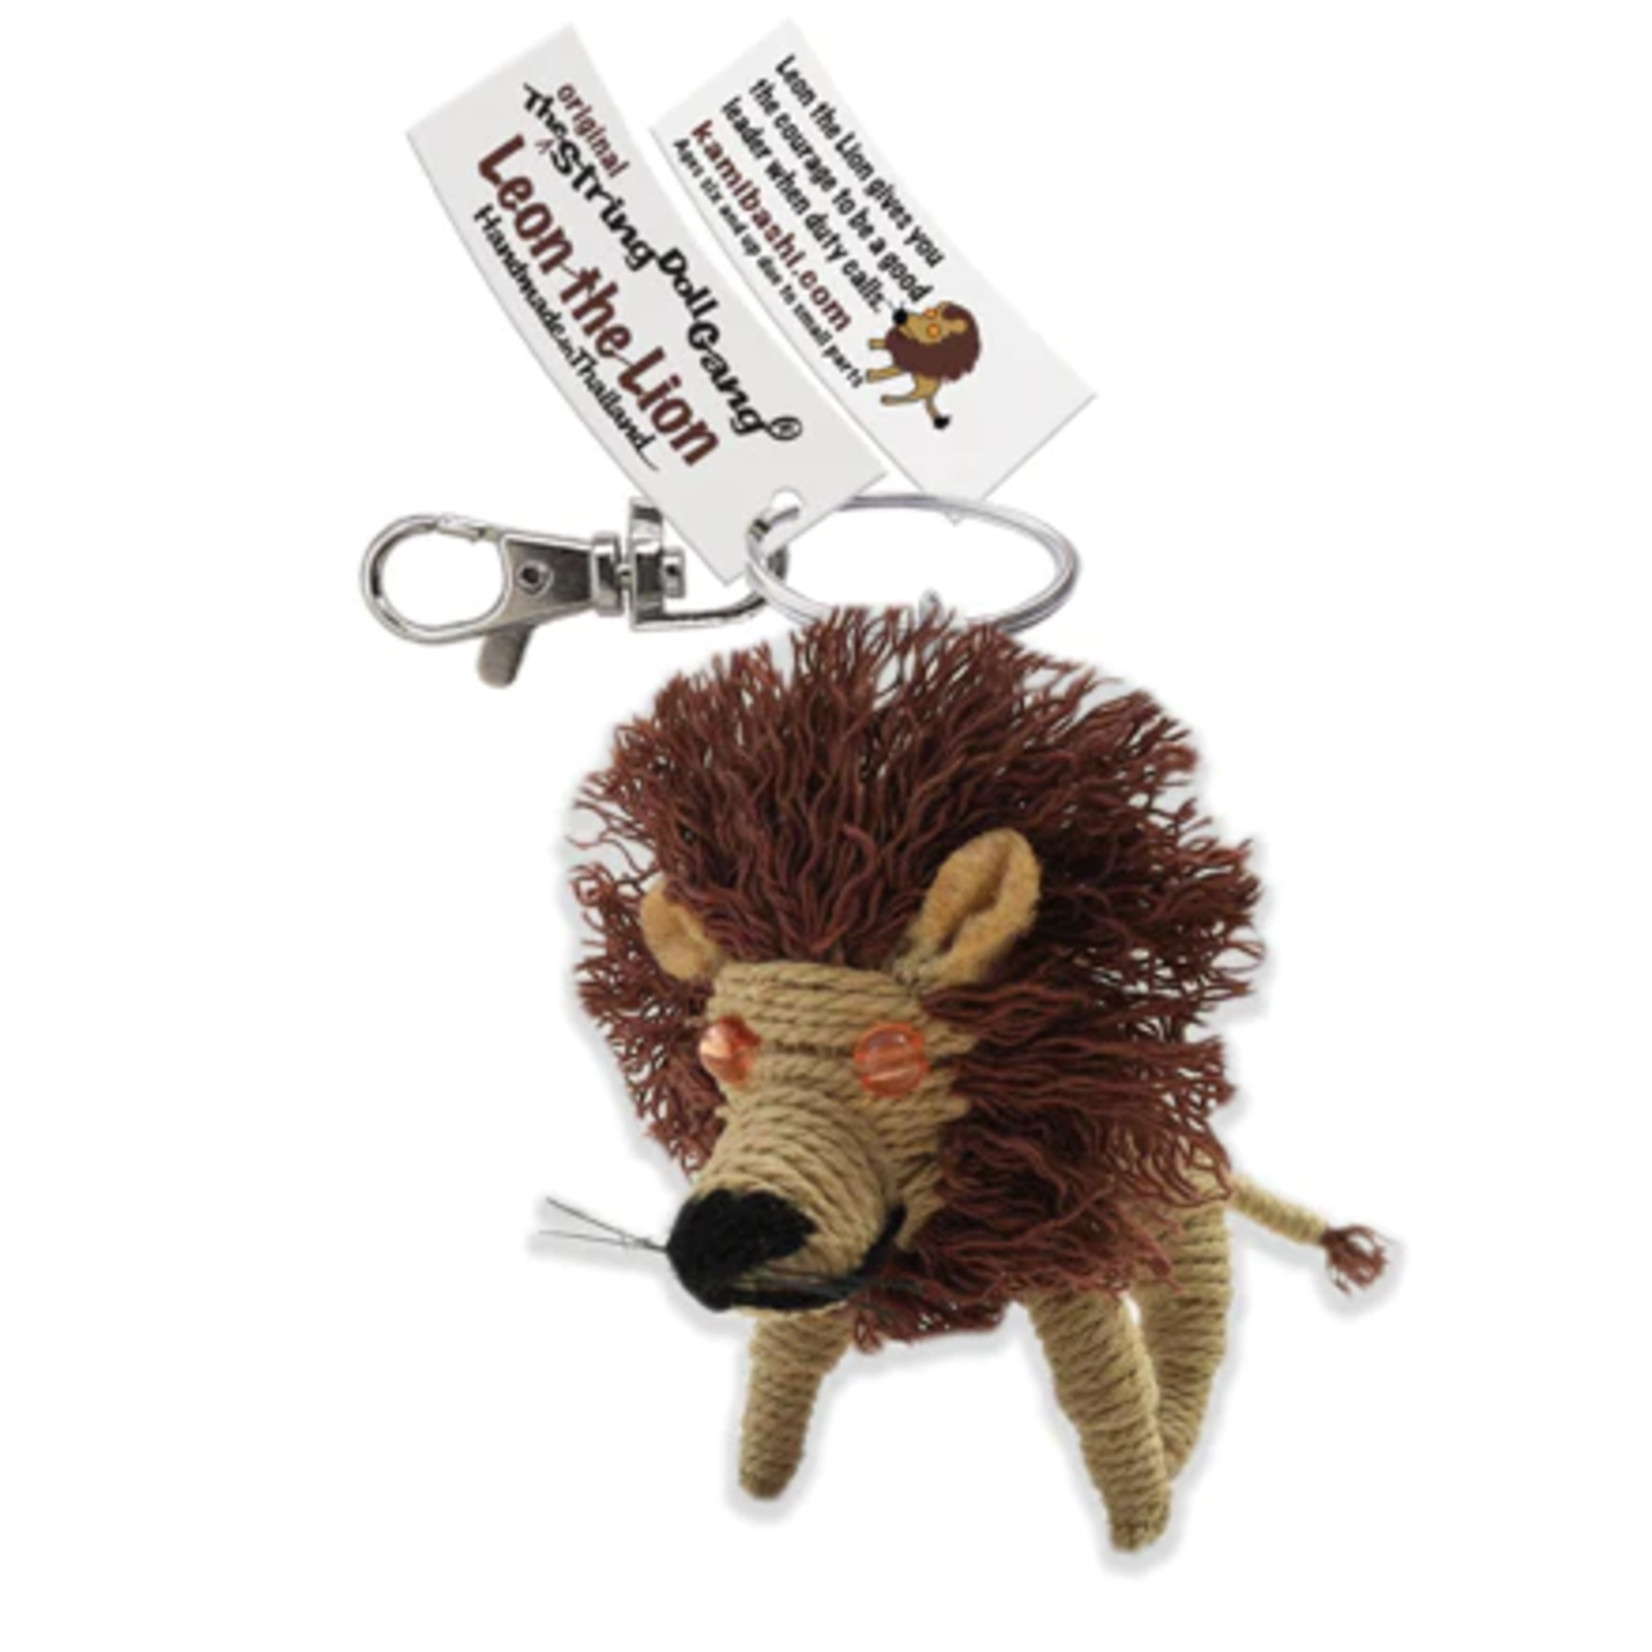 Thailand Leon the Lion String Doll Keychain